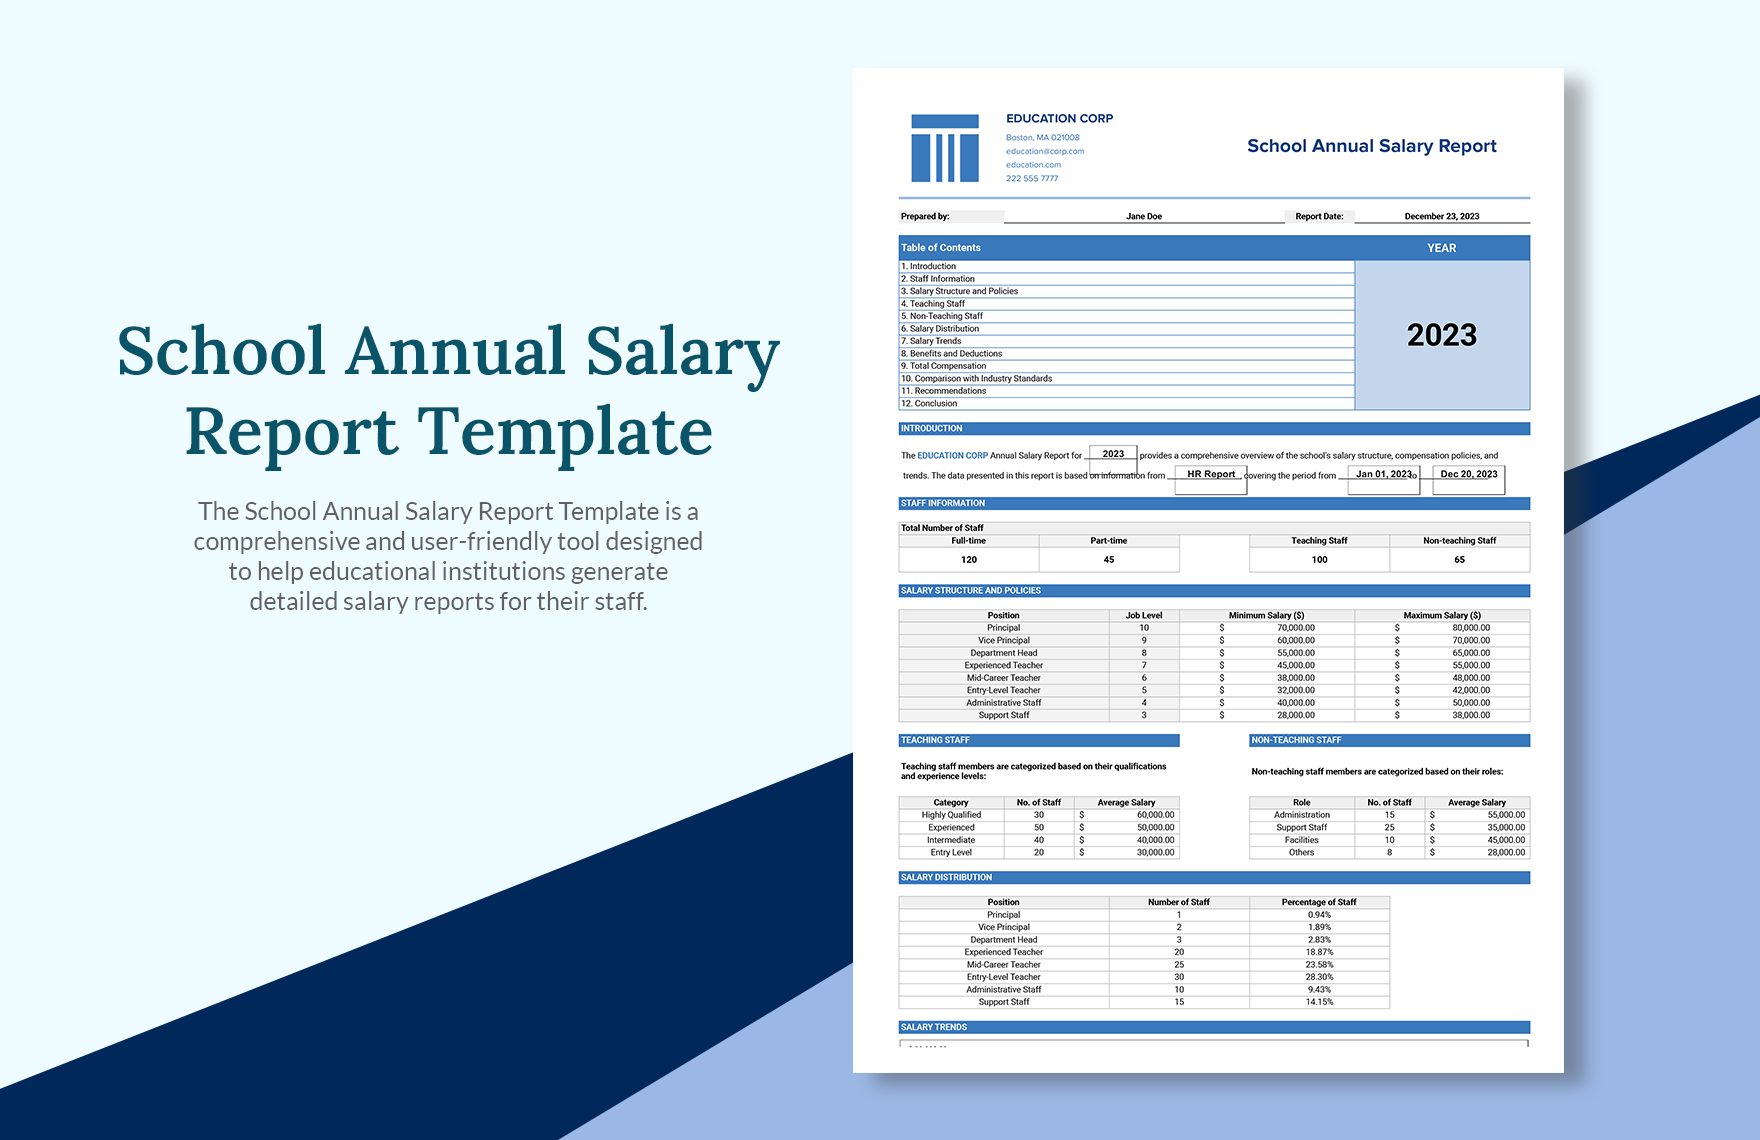 School Annual Salary Report Template